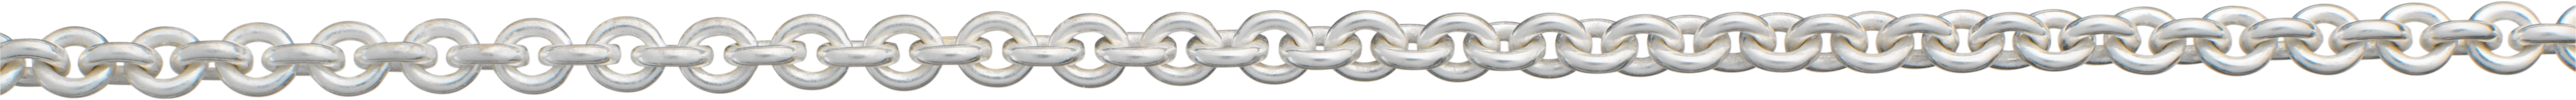 ankerketting rond zilver 925/- 3,10mm, draad dikte 0,80mm